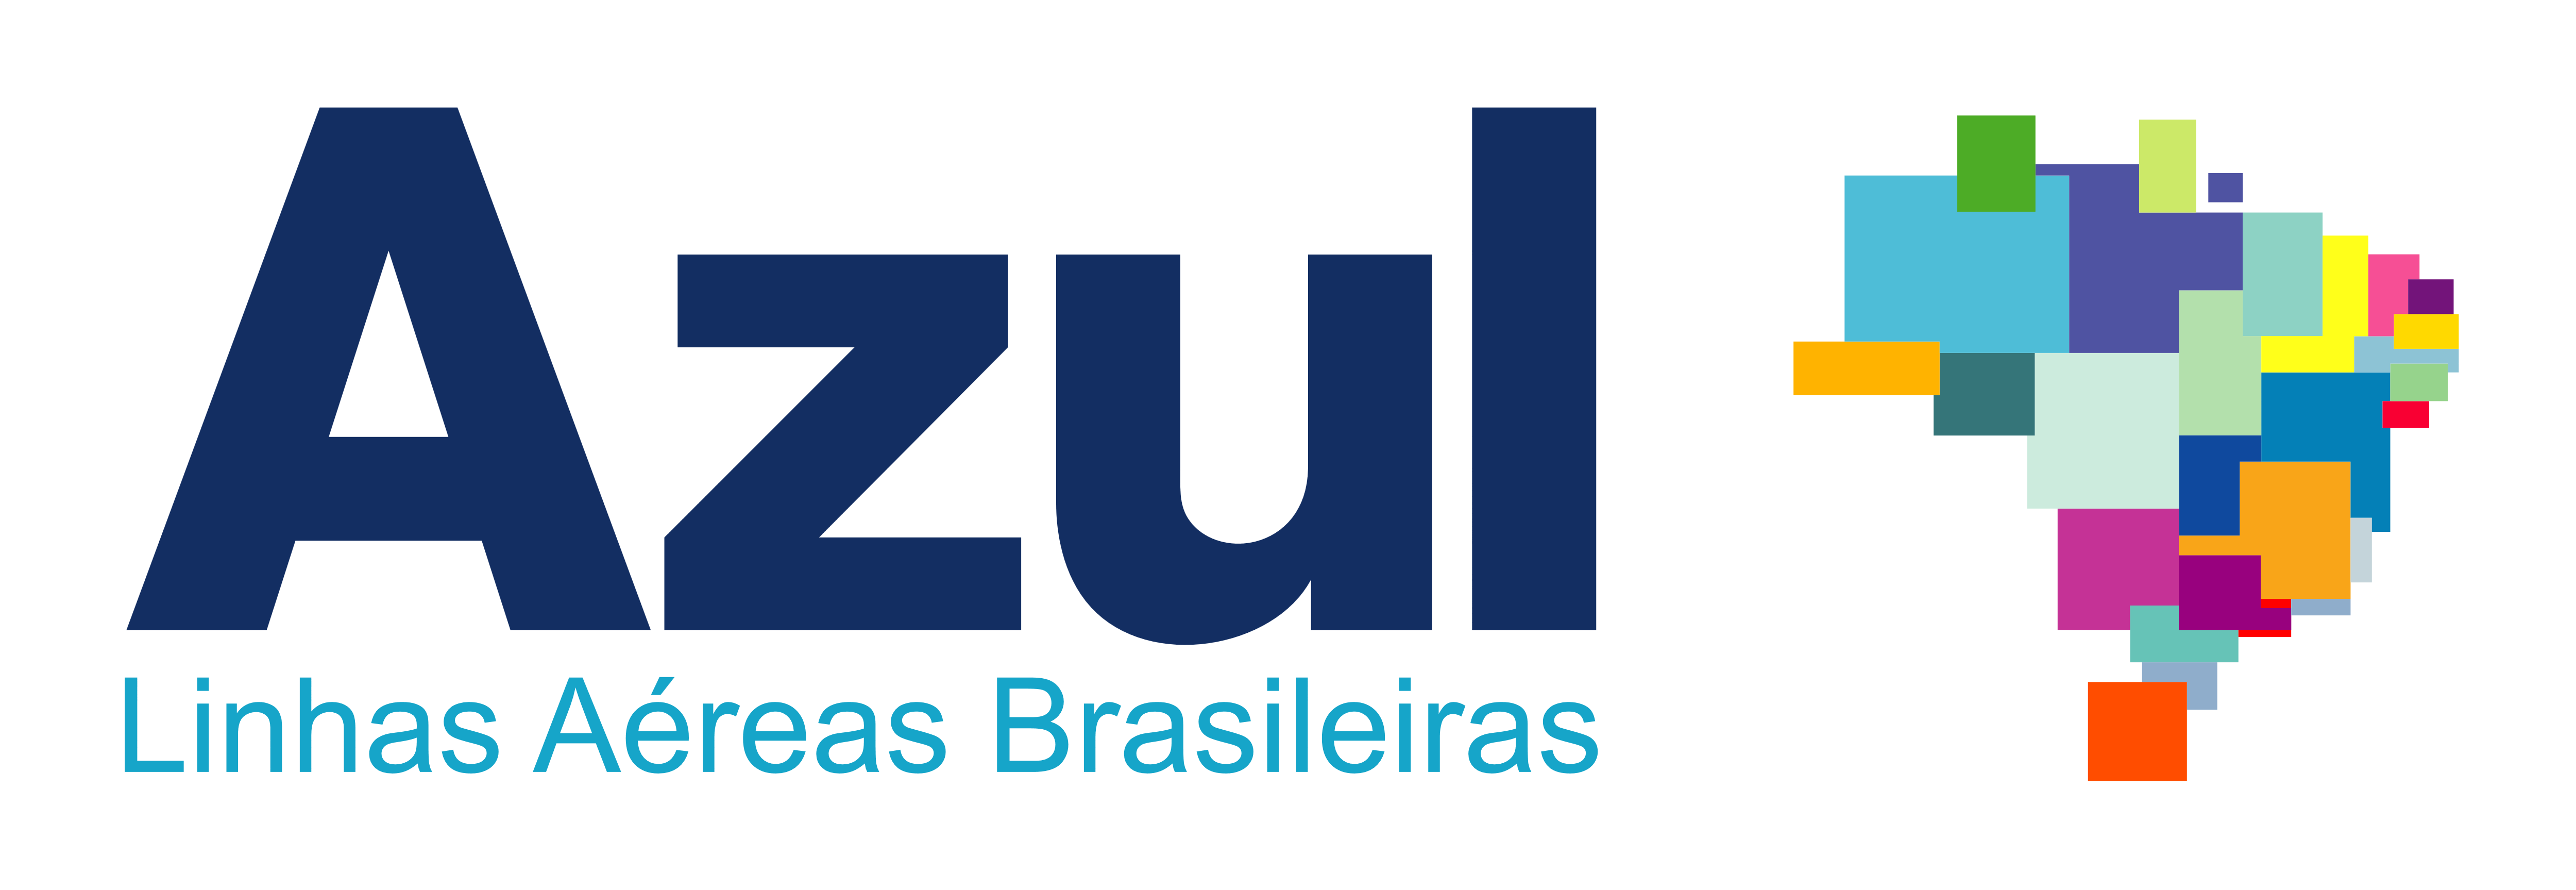 Azul Brand Logo